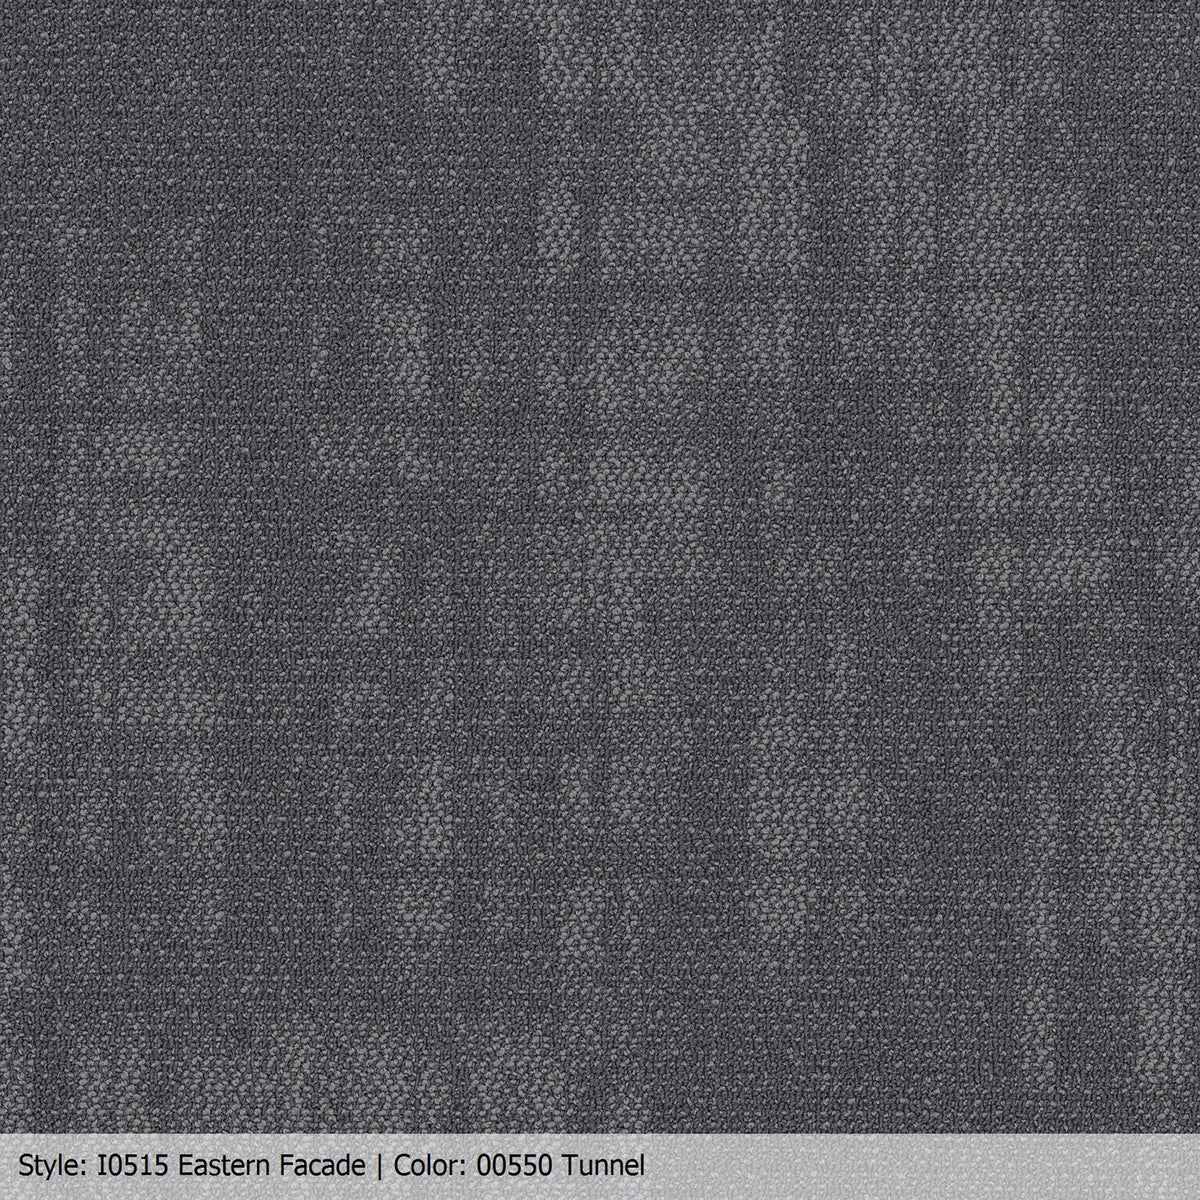 Patcraft - Urban Relief Collection - Eastern Facade Carpet Tile - Tunnel 00550